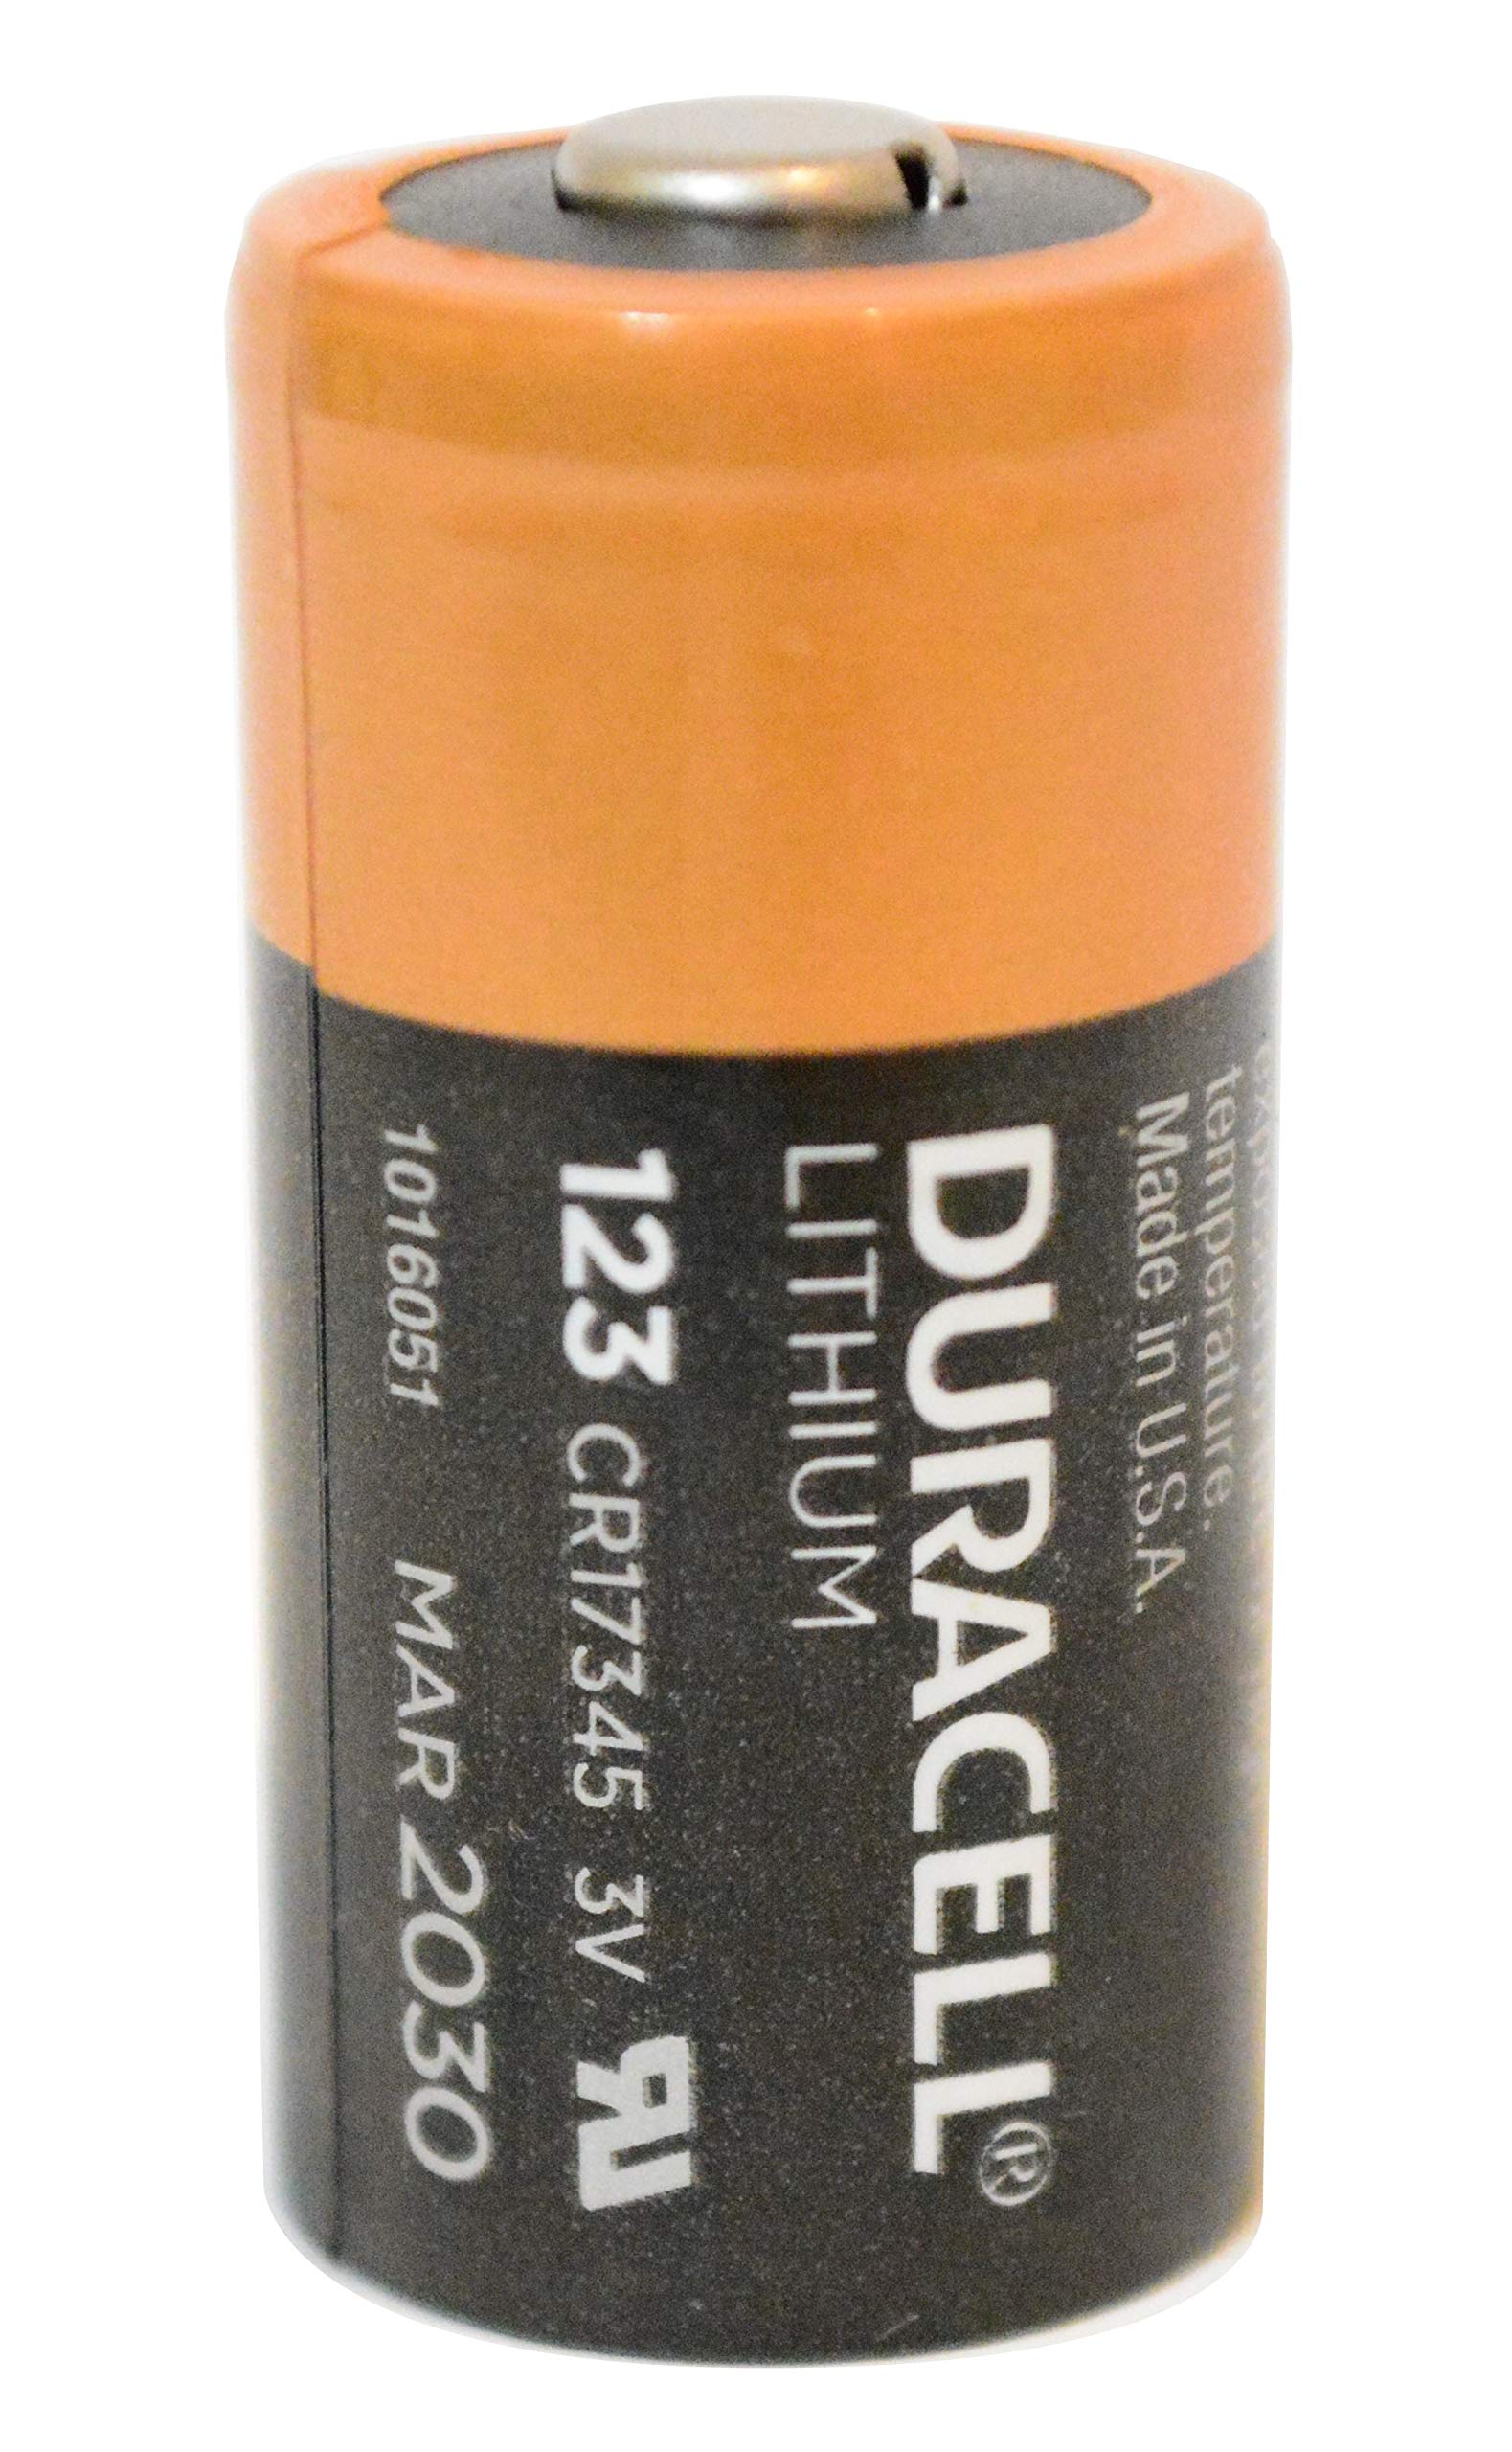 DL123A Duracell Ultra Lithium 8 Batteries-CR123A